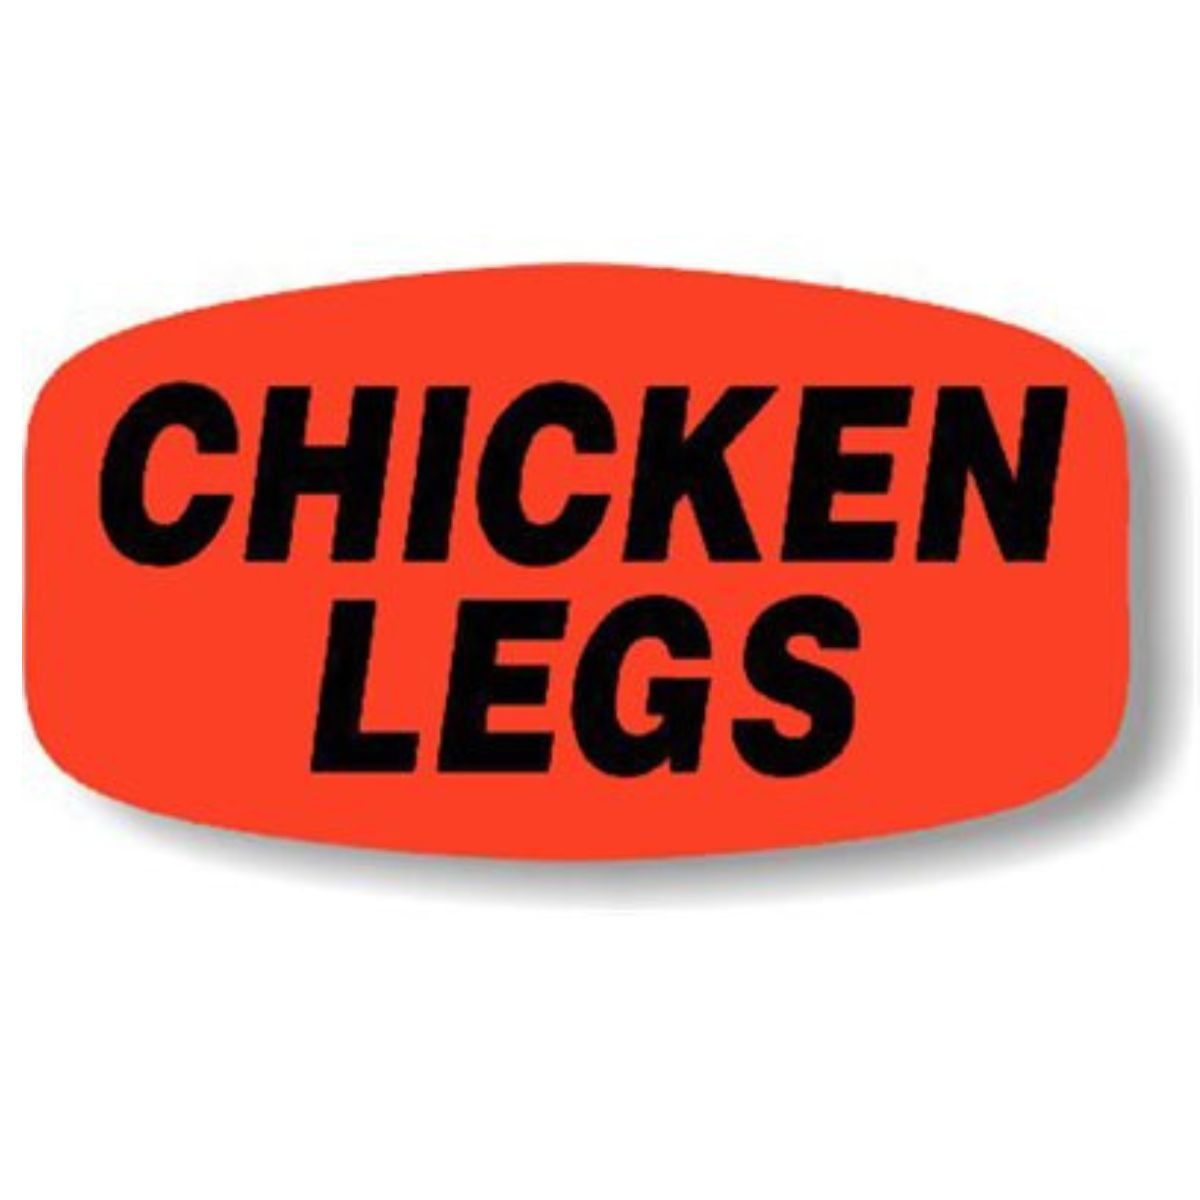 Bollin Label 12067 - Chicken Legs Label Short Oval Black on Red - Roll of 1000